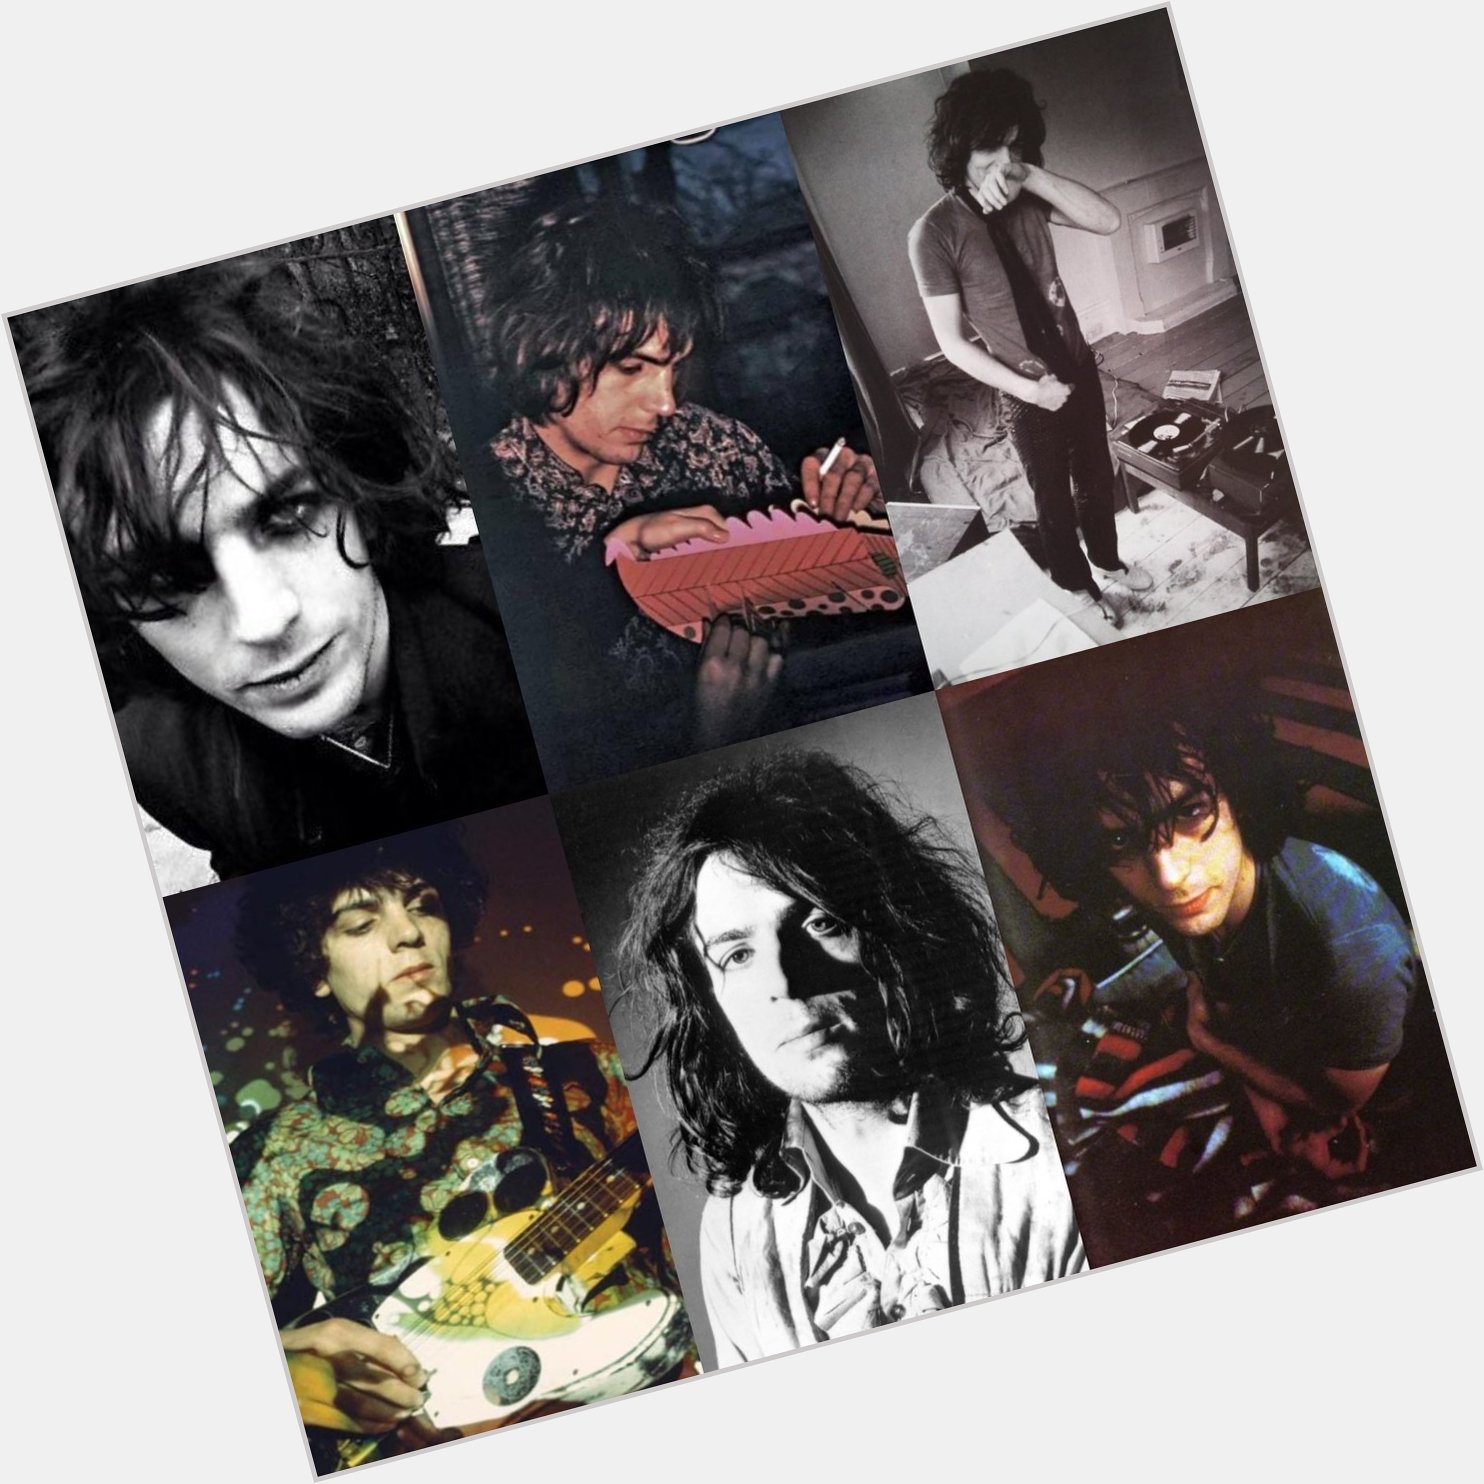 Happy birthday to the psychedelic genius, Syd Barrett 6 January 1946 - 7 July 2006 